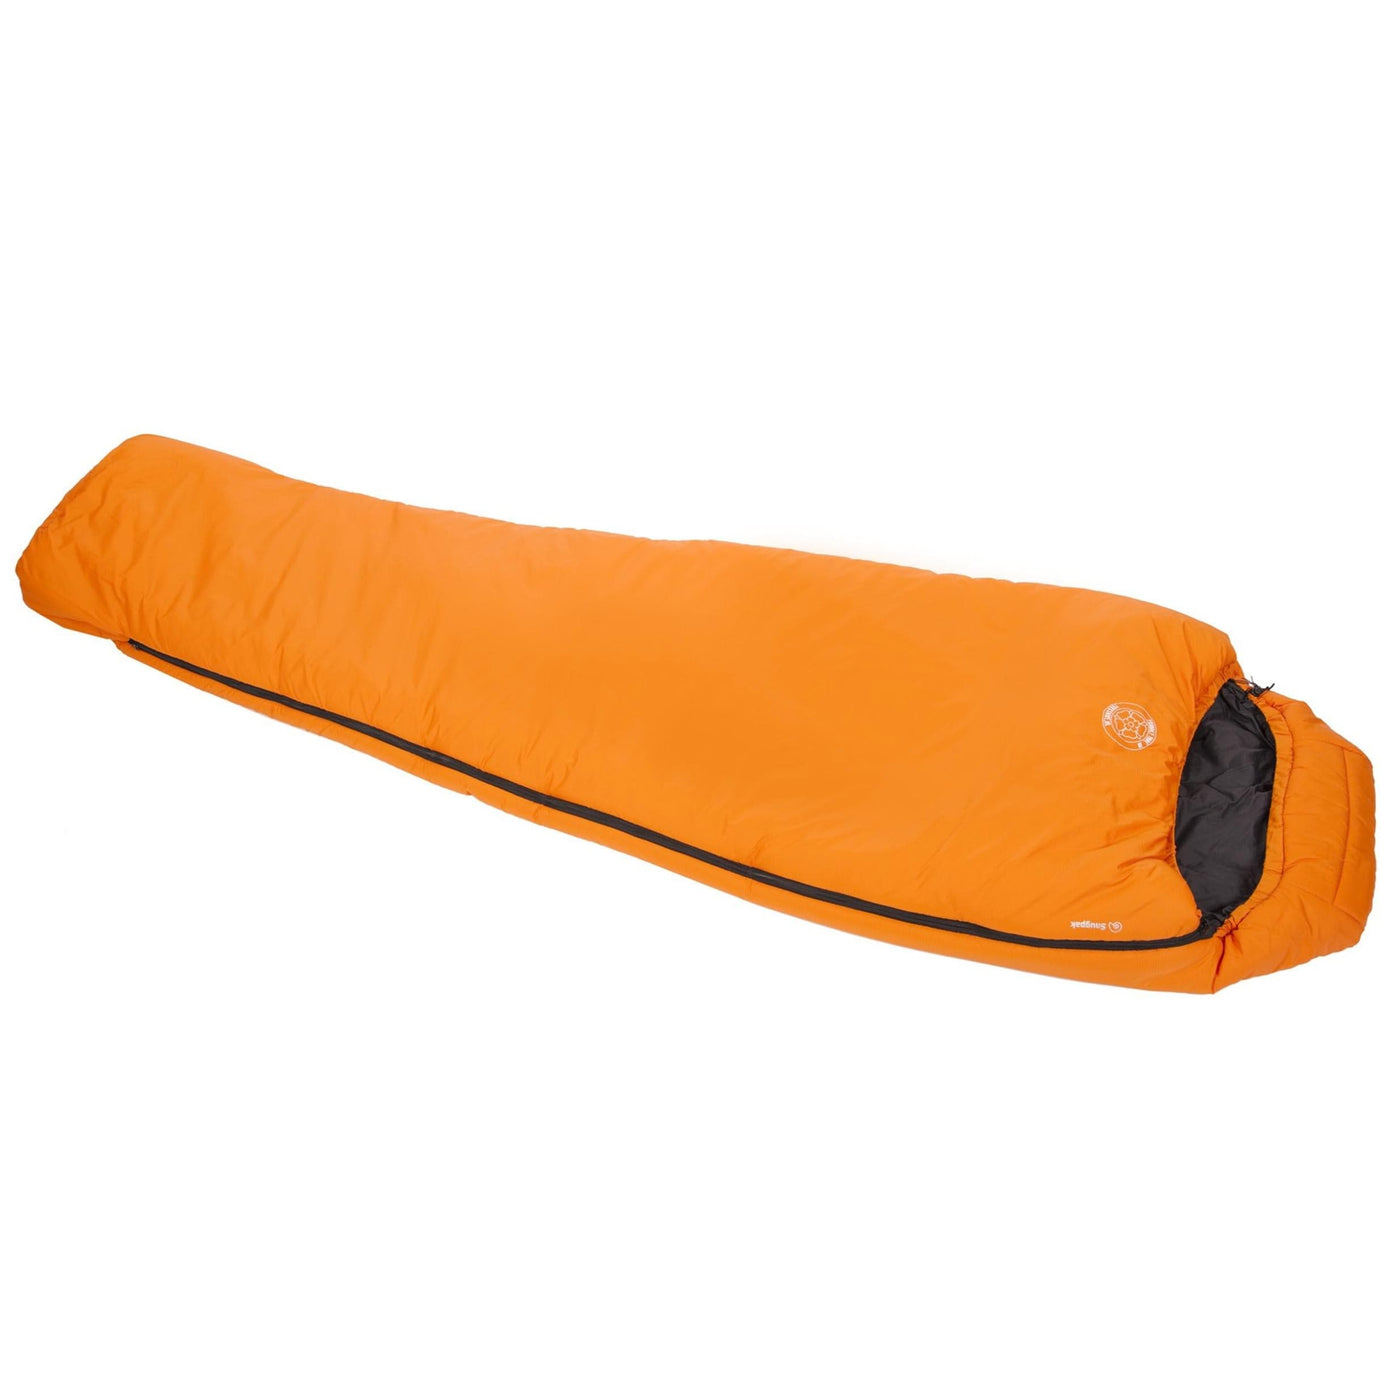 Snugpak Snugpak Softie 15 Intrepid Sleeping Bag Orange Zip Left hand Camping And Outdoor